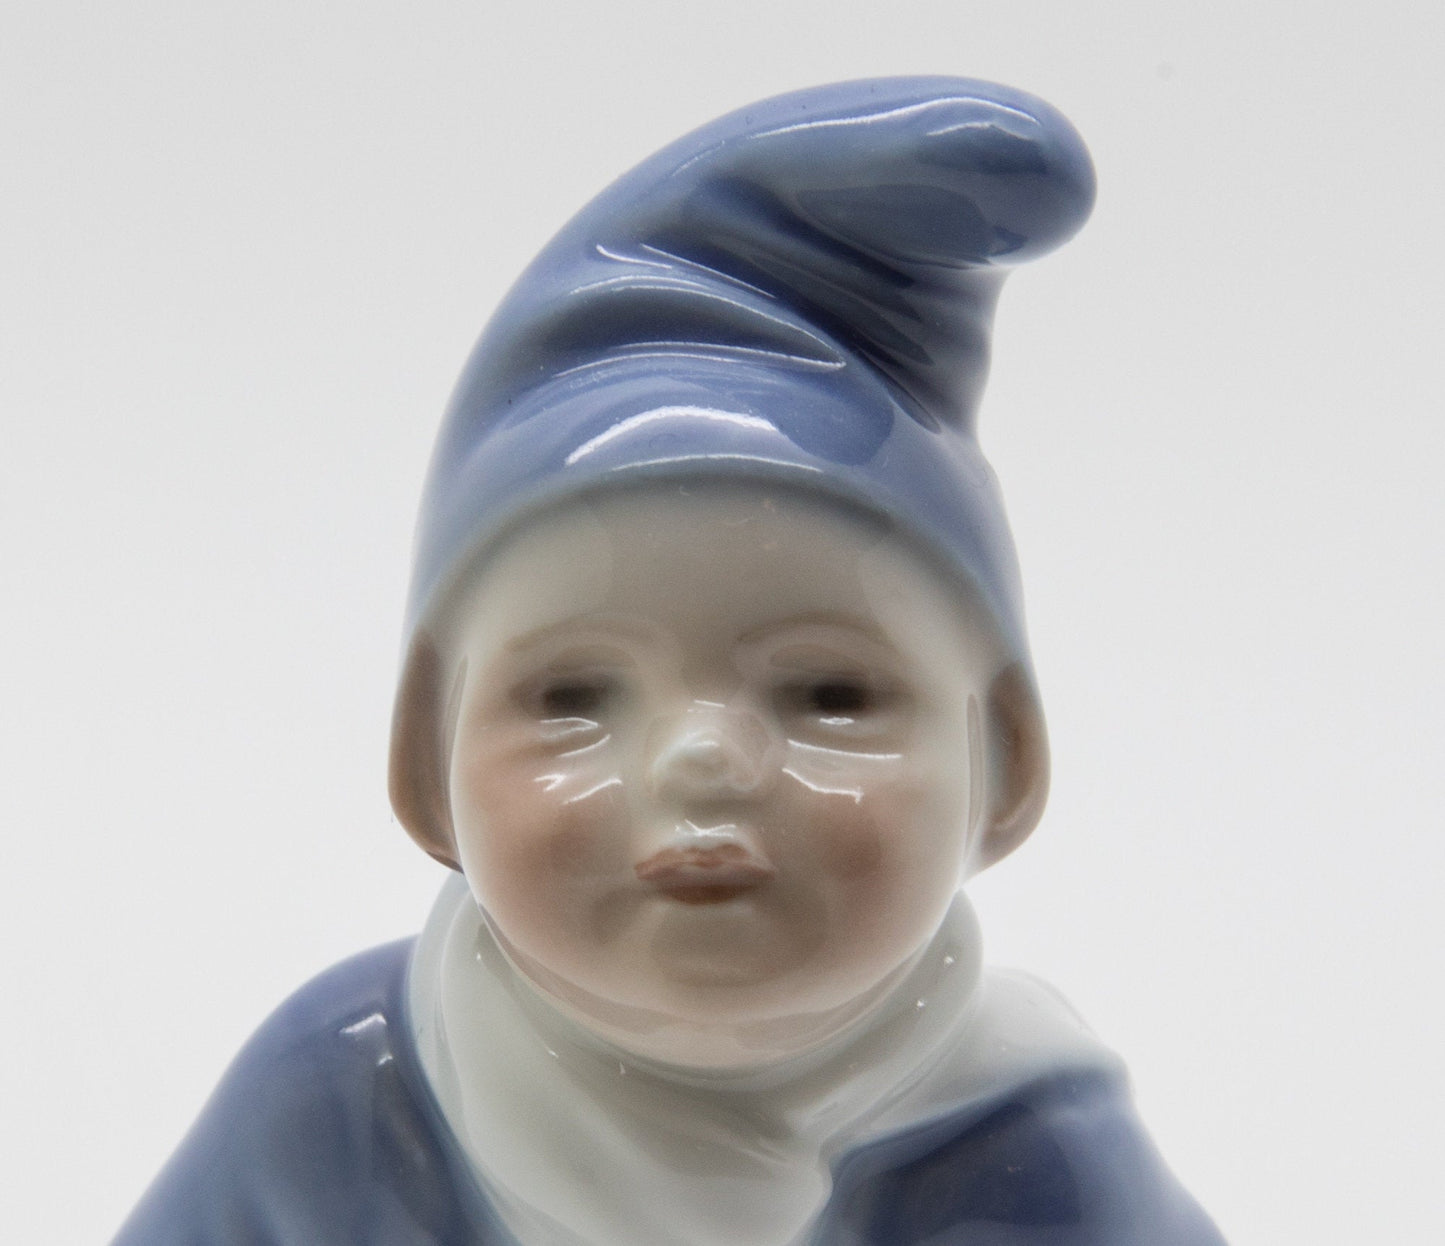 Royal Copenhagen Decorated Porcelain Little Drummer Boy Figurine # 148 Mollaris.com 